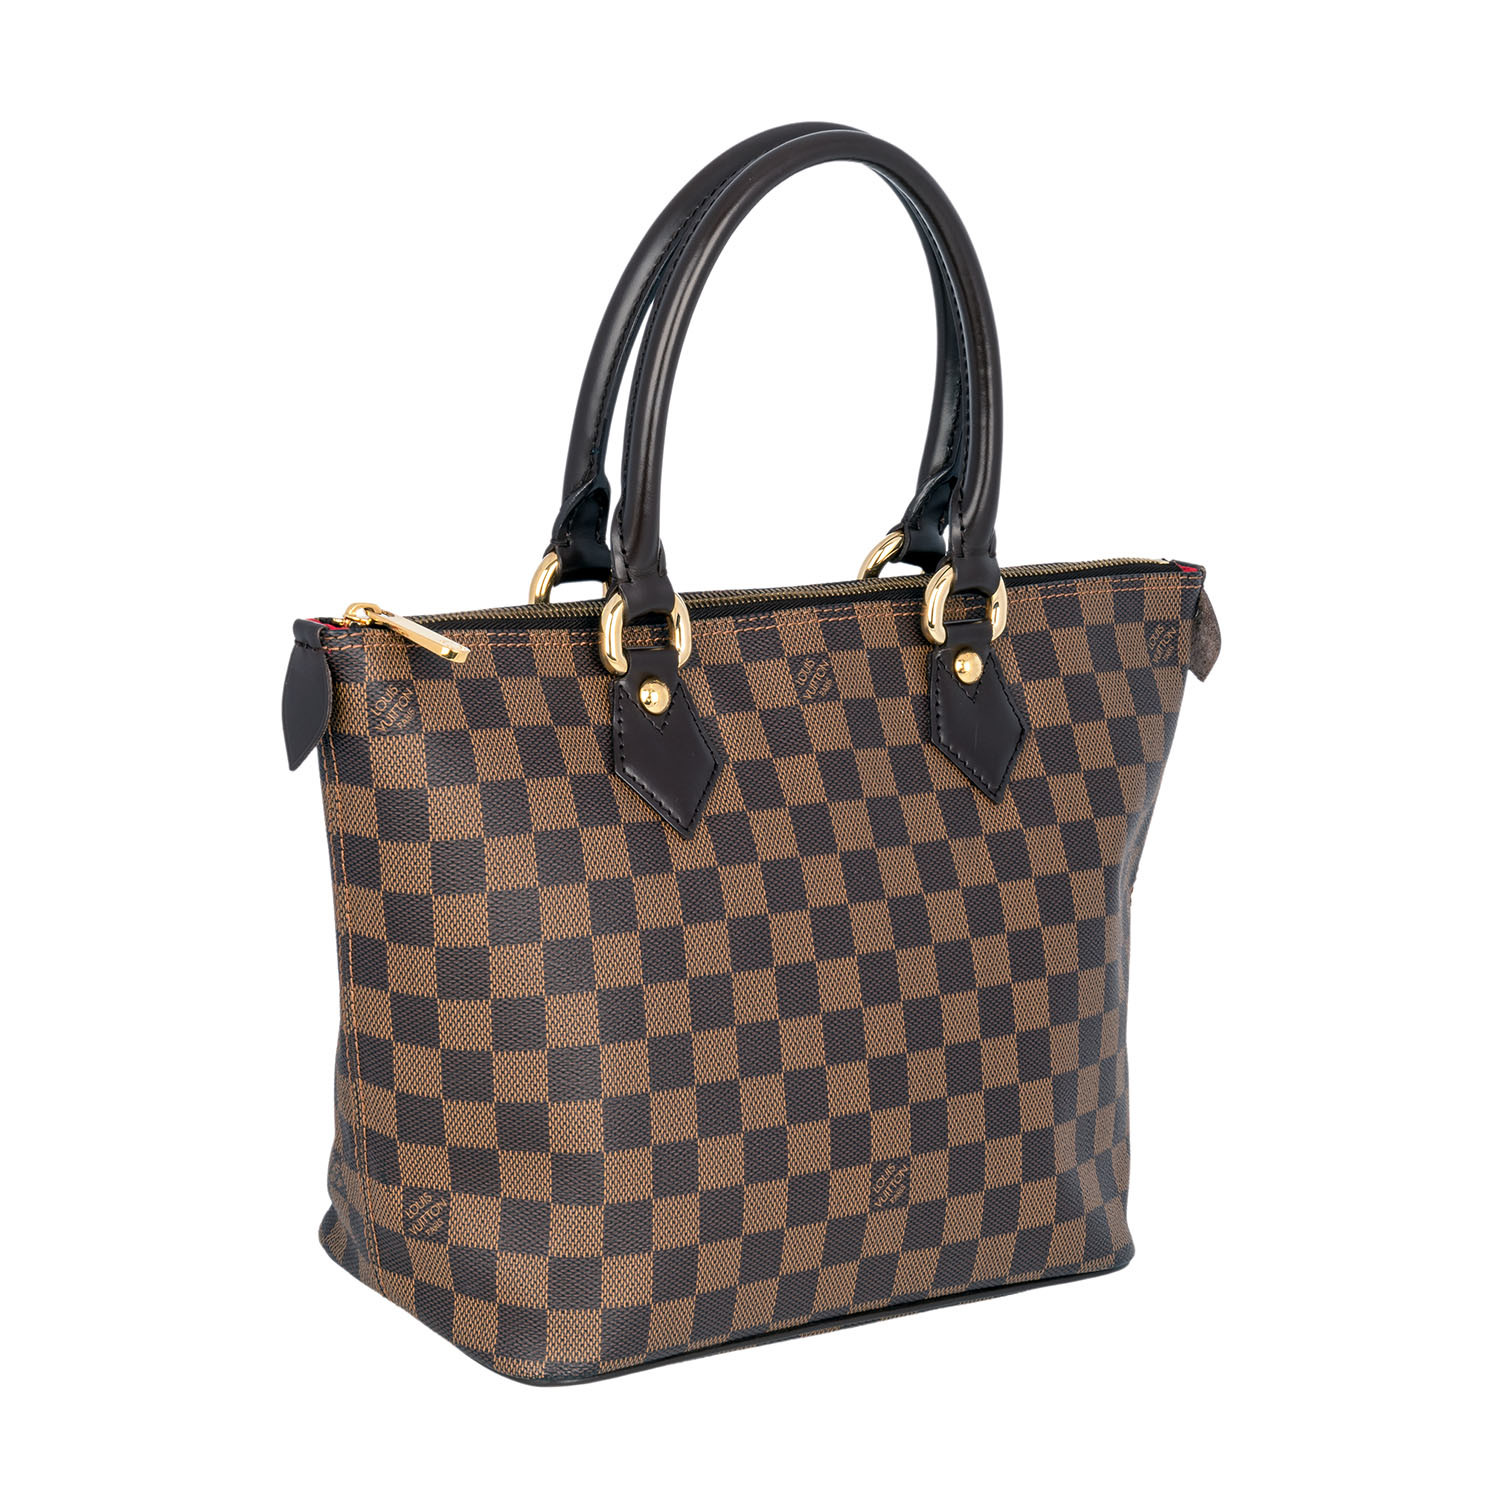 Louis Vuittons Handbags Used :: Keweenaw Bay Indian Community